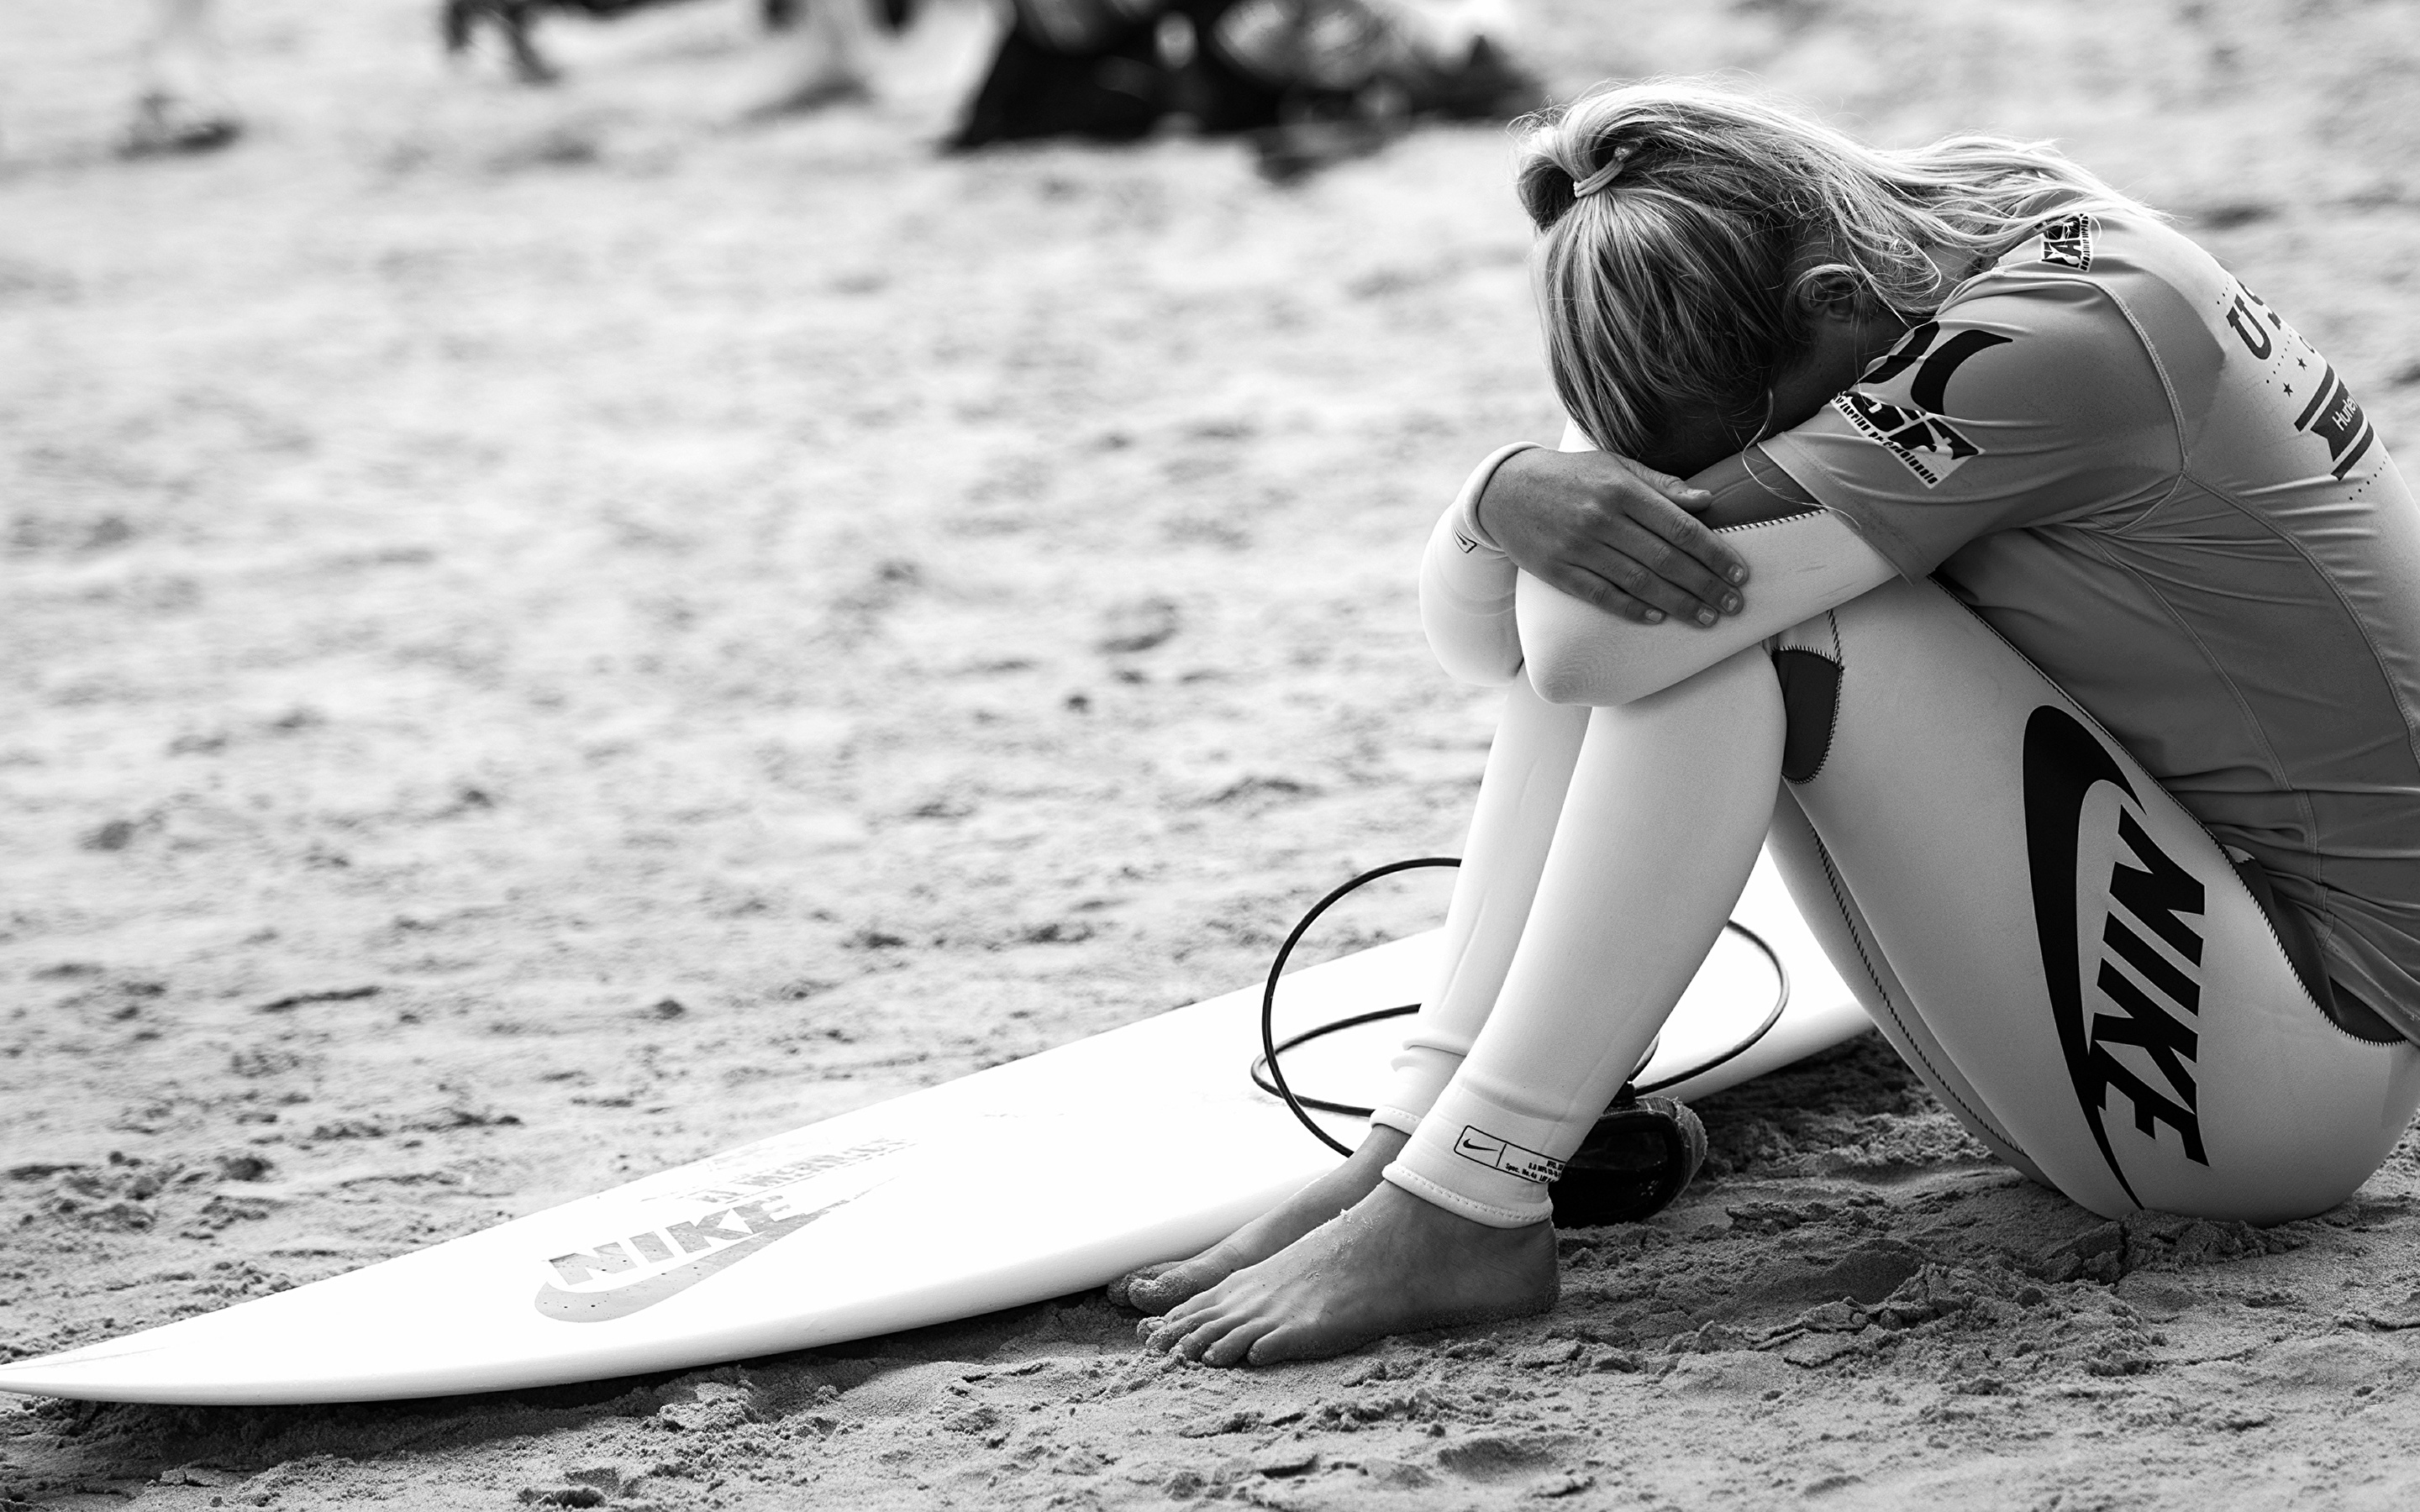 Image Nike Beach Girls Sport Surfing Brands Sitting